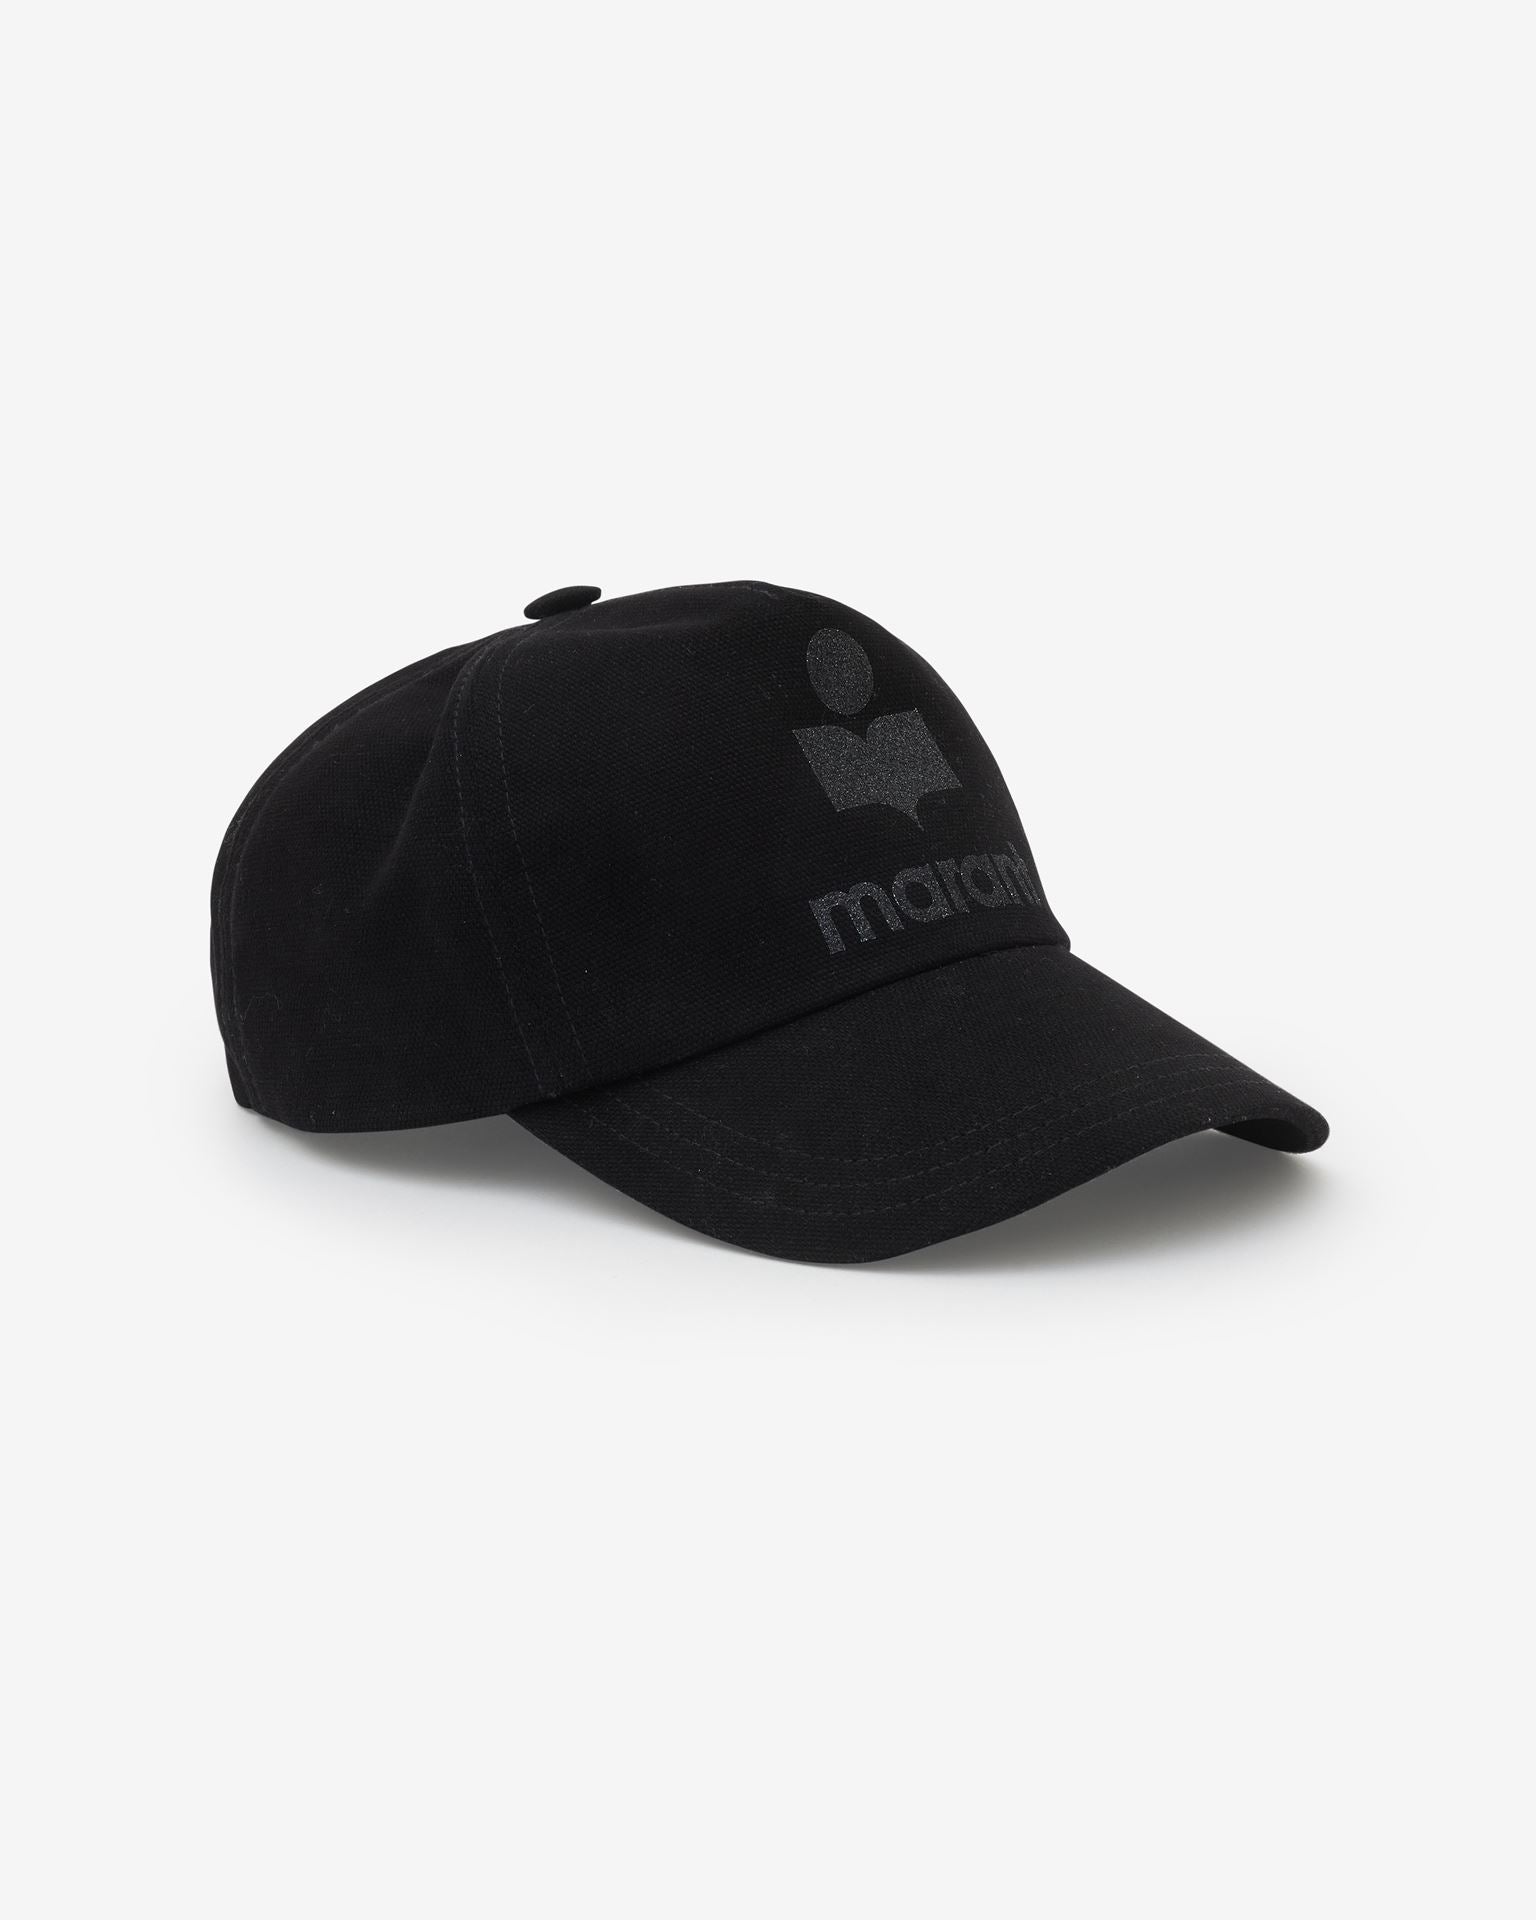 Tyron cap, black